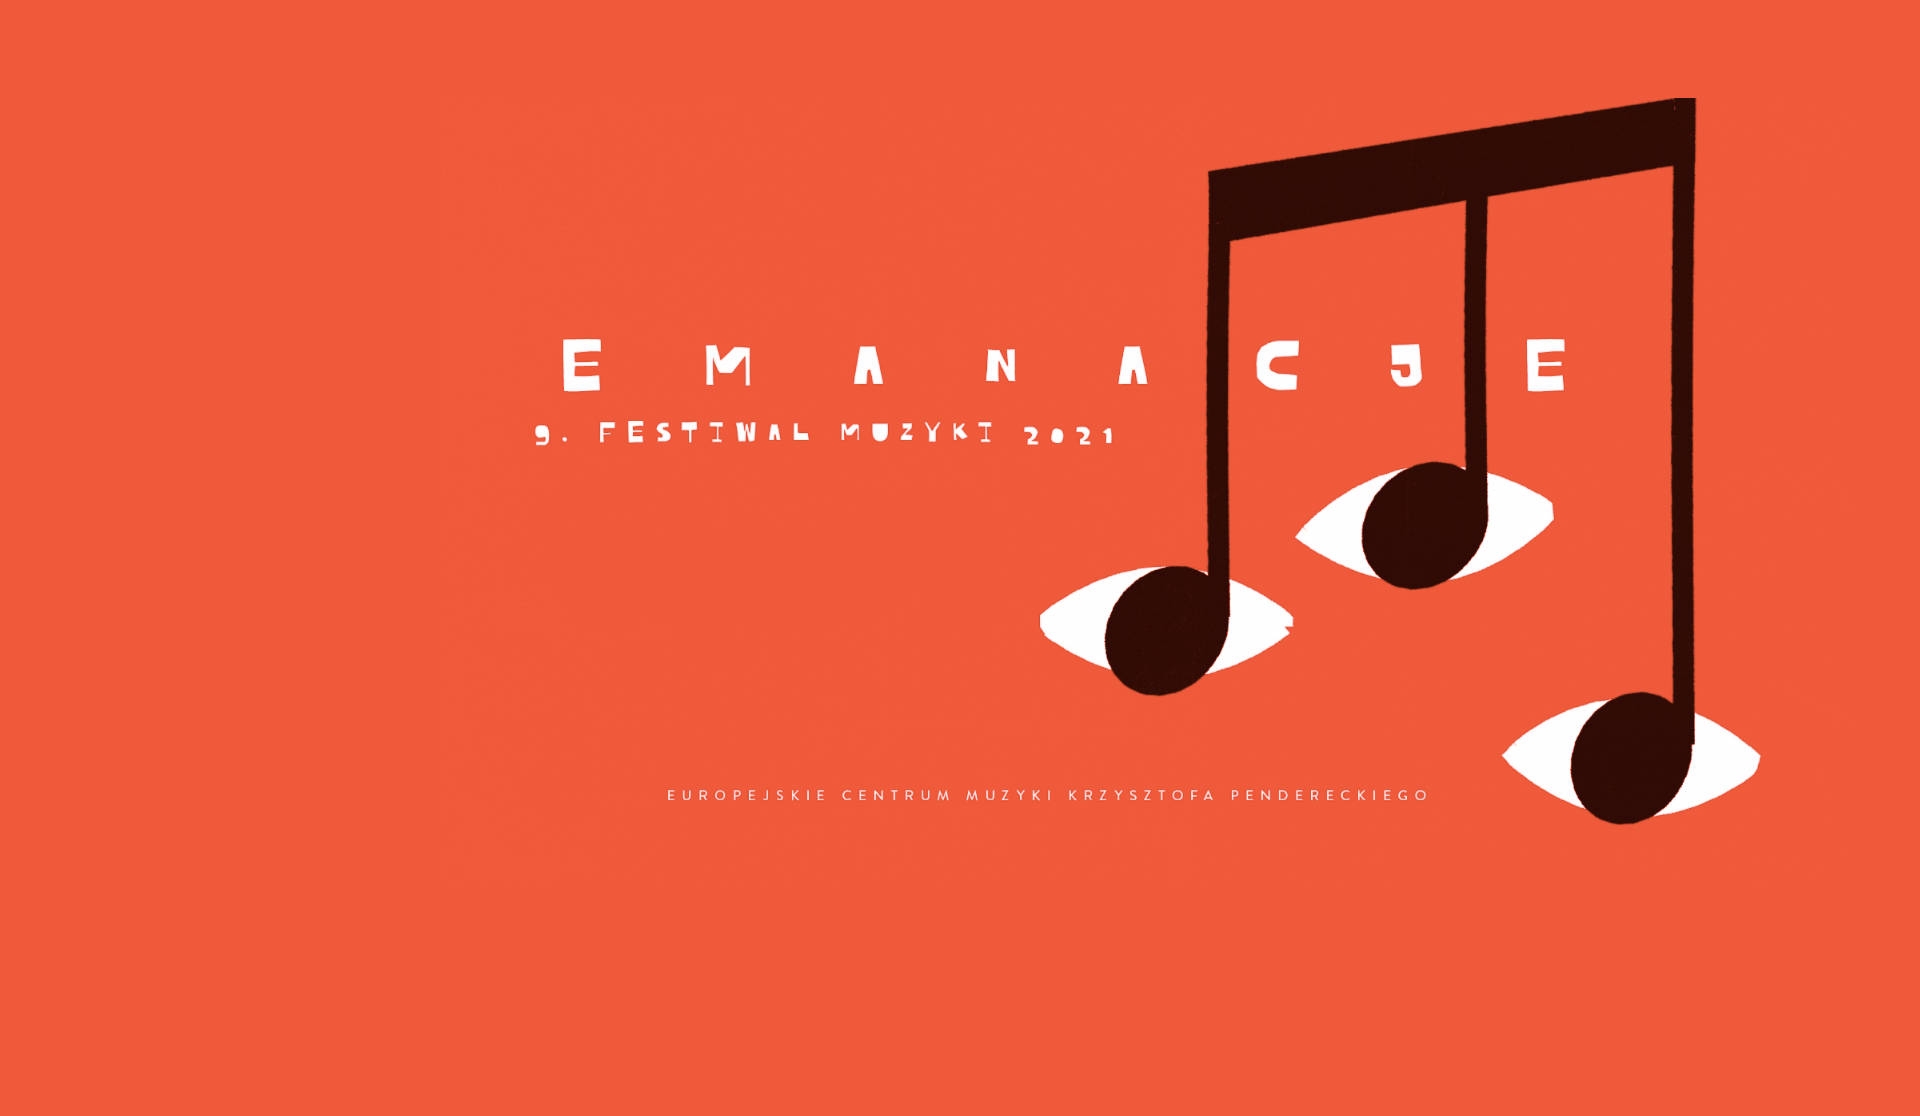 8.08.2021 – 9th EMANACJE (Emanations) International Music Festival, Lusławice, Poland